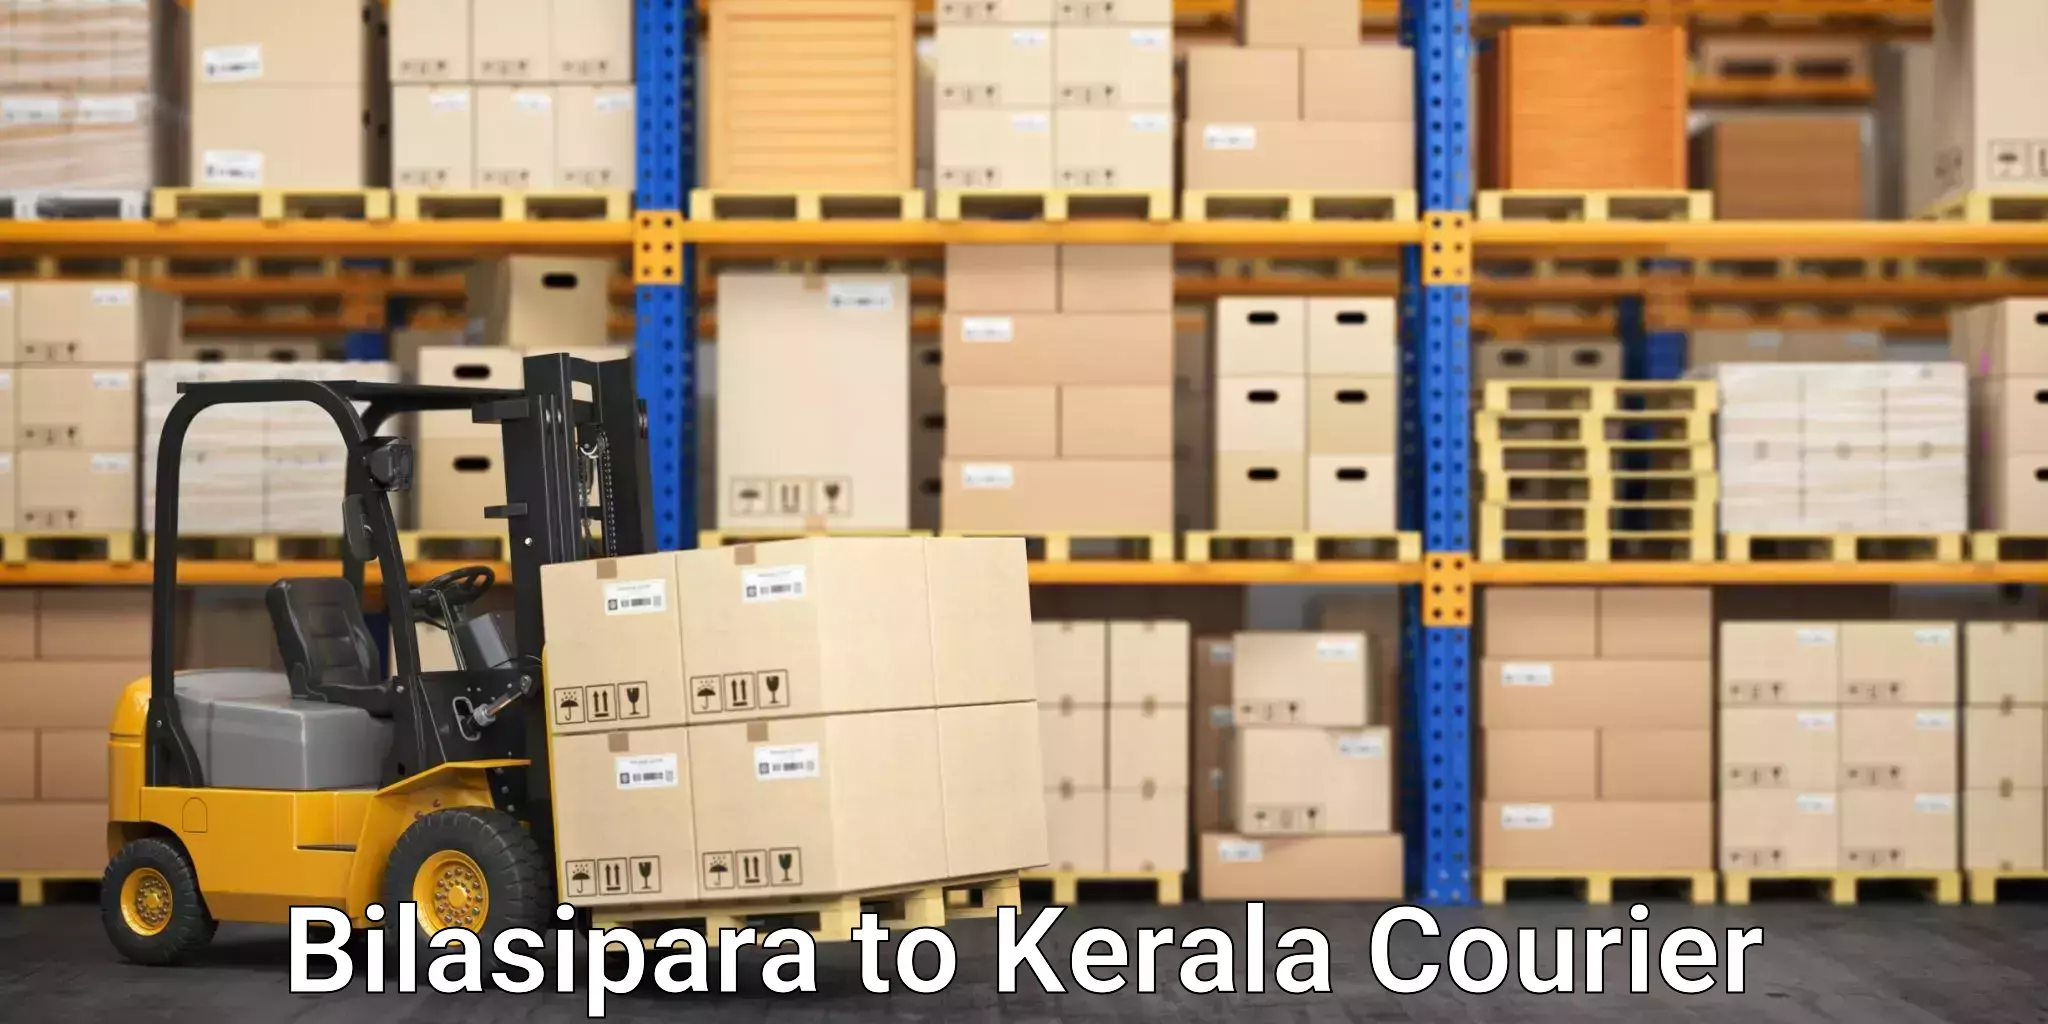 Customizable shipping options in Bilasipara to Kattappana